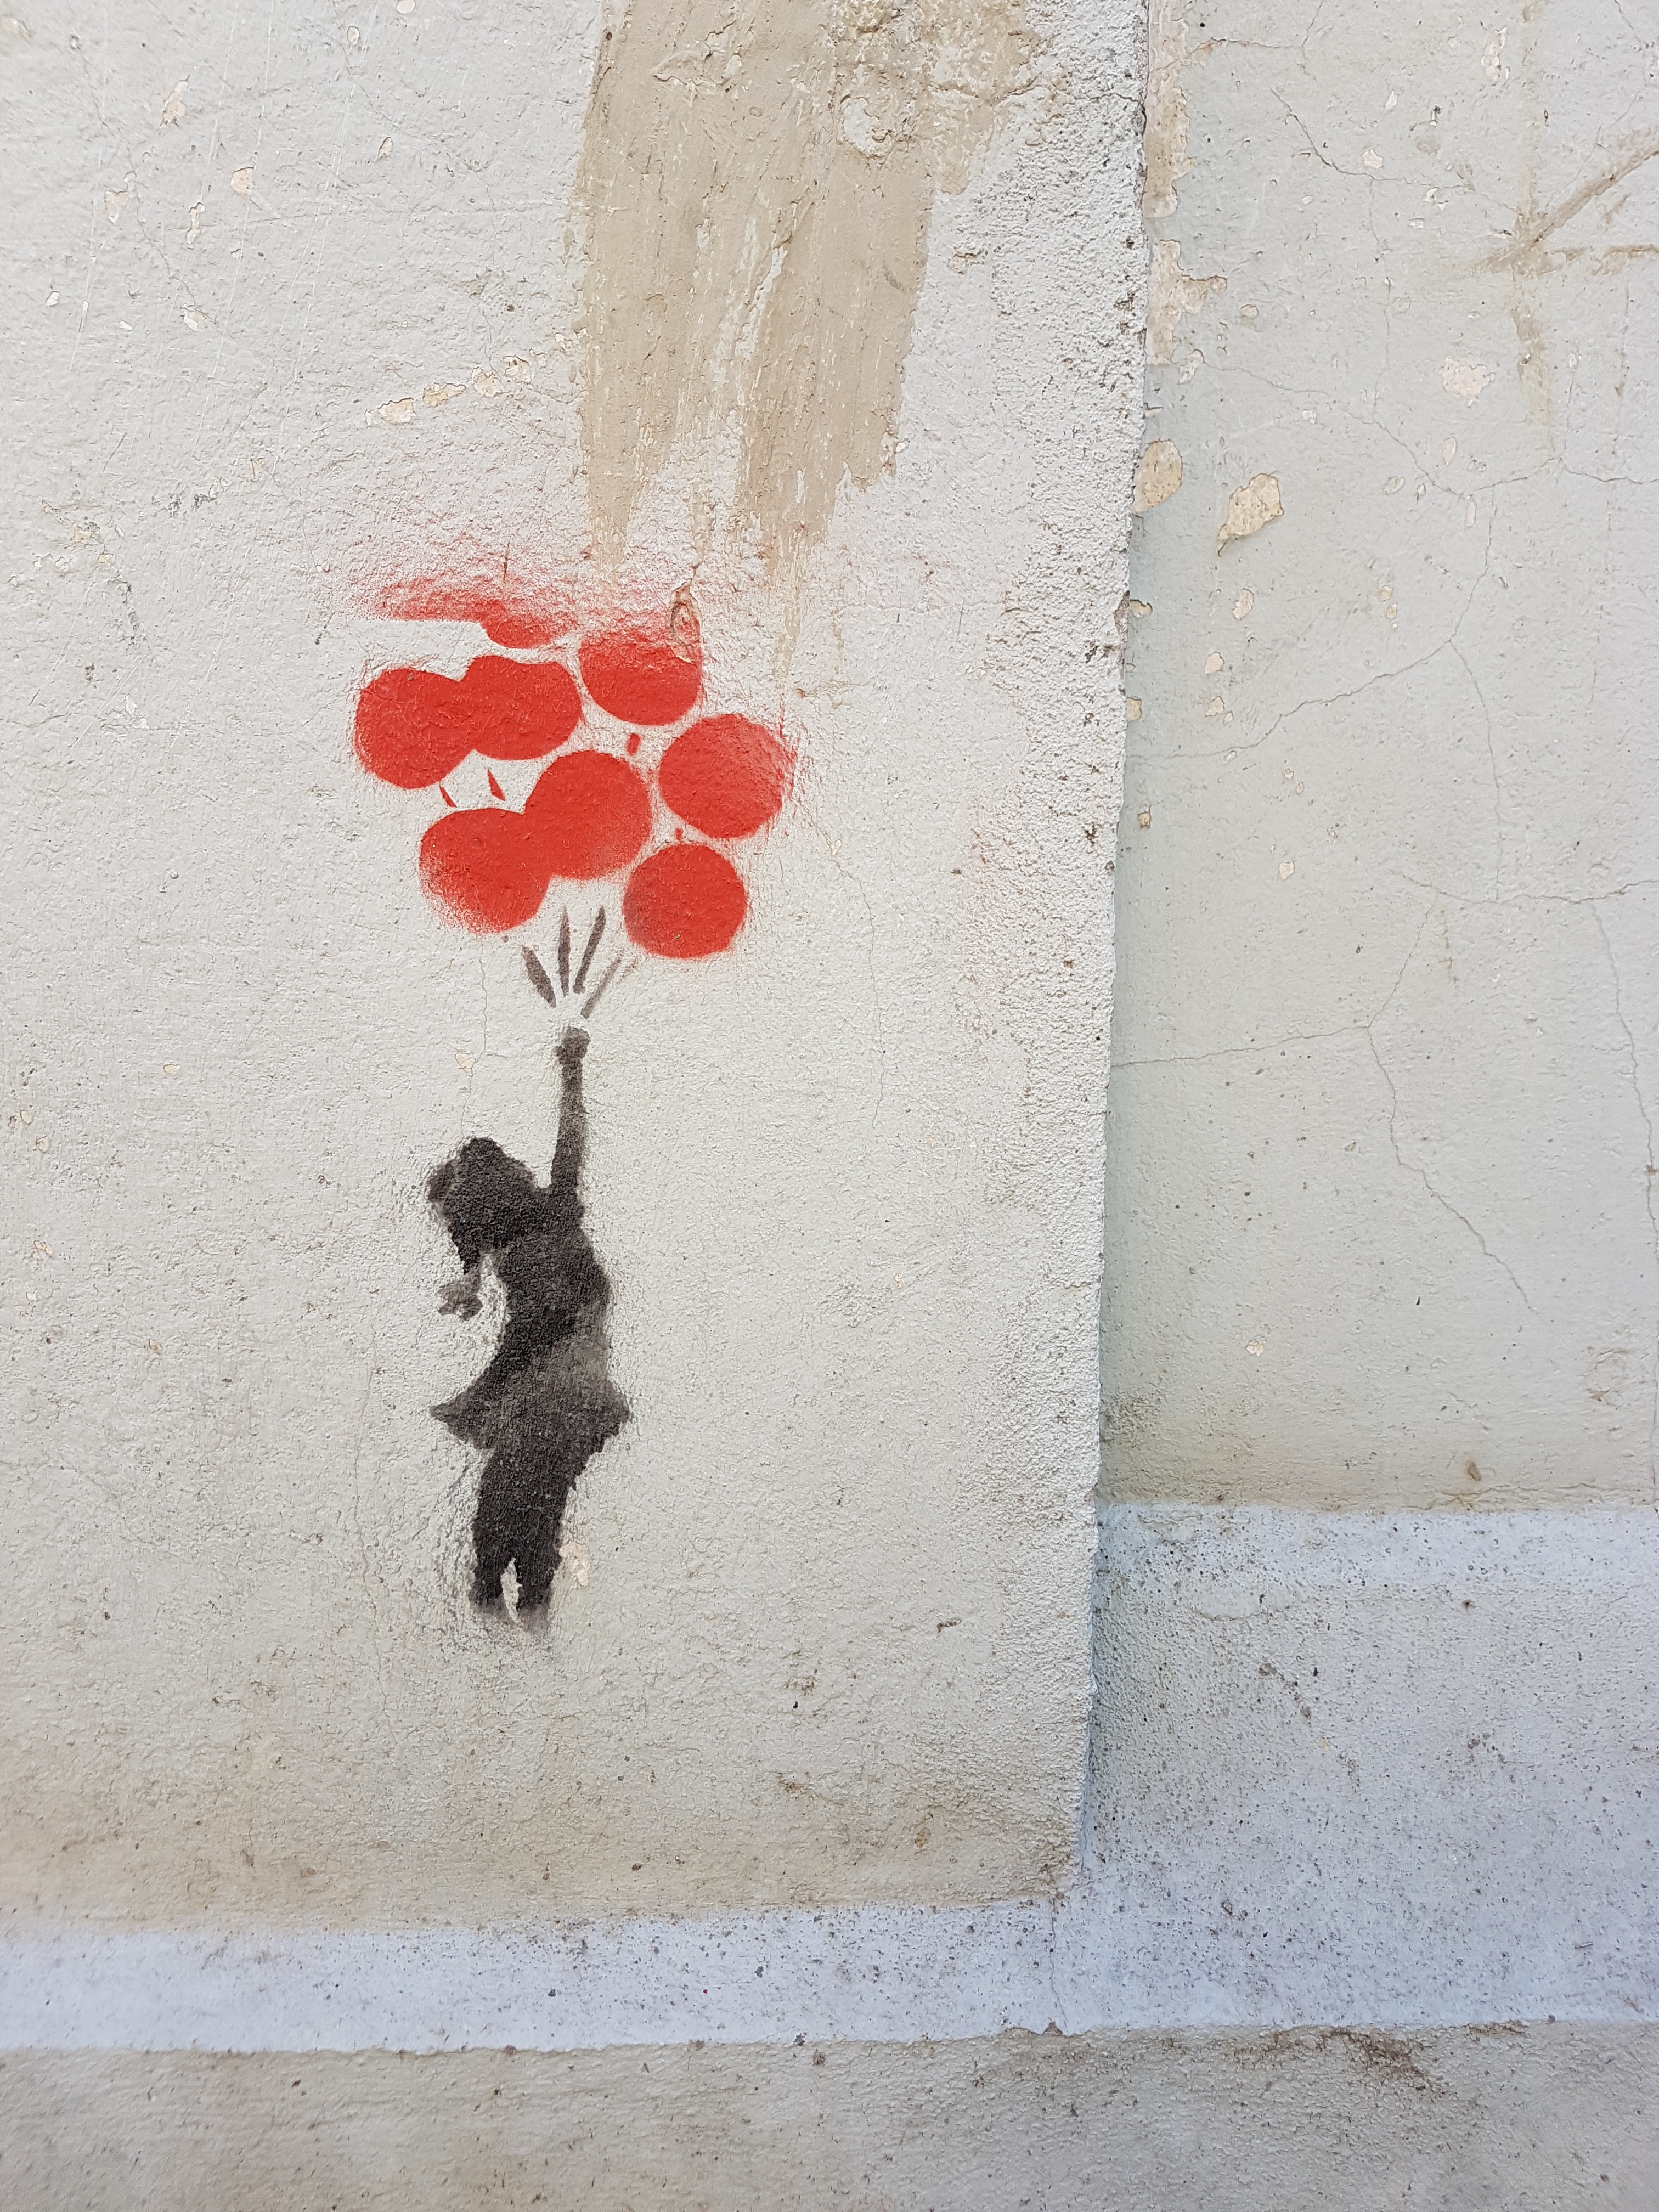 graffiti, art, balloons, paint, wall, child, street art